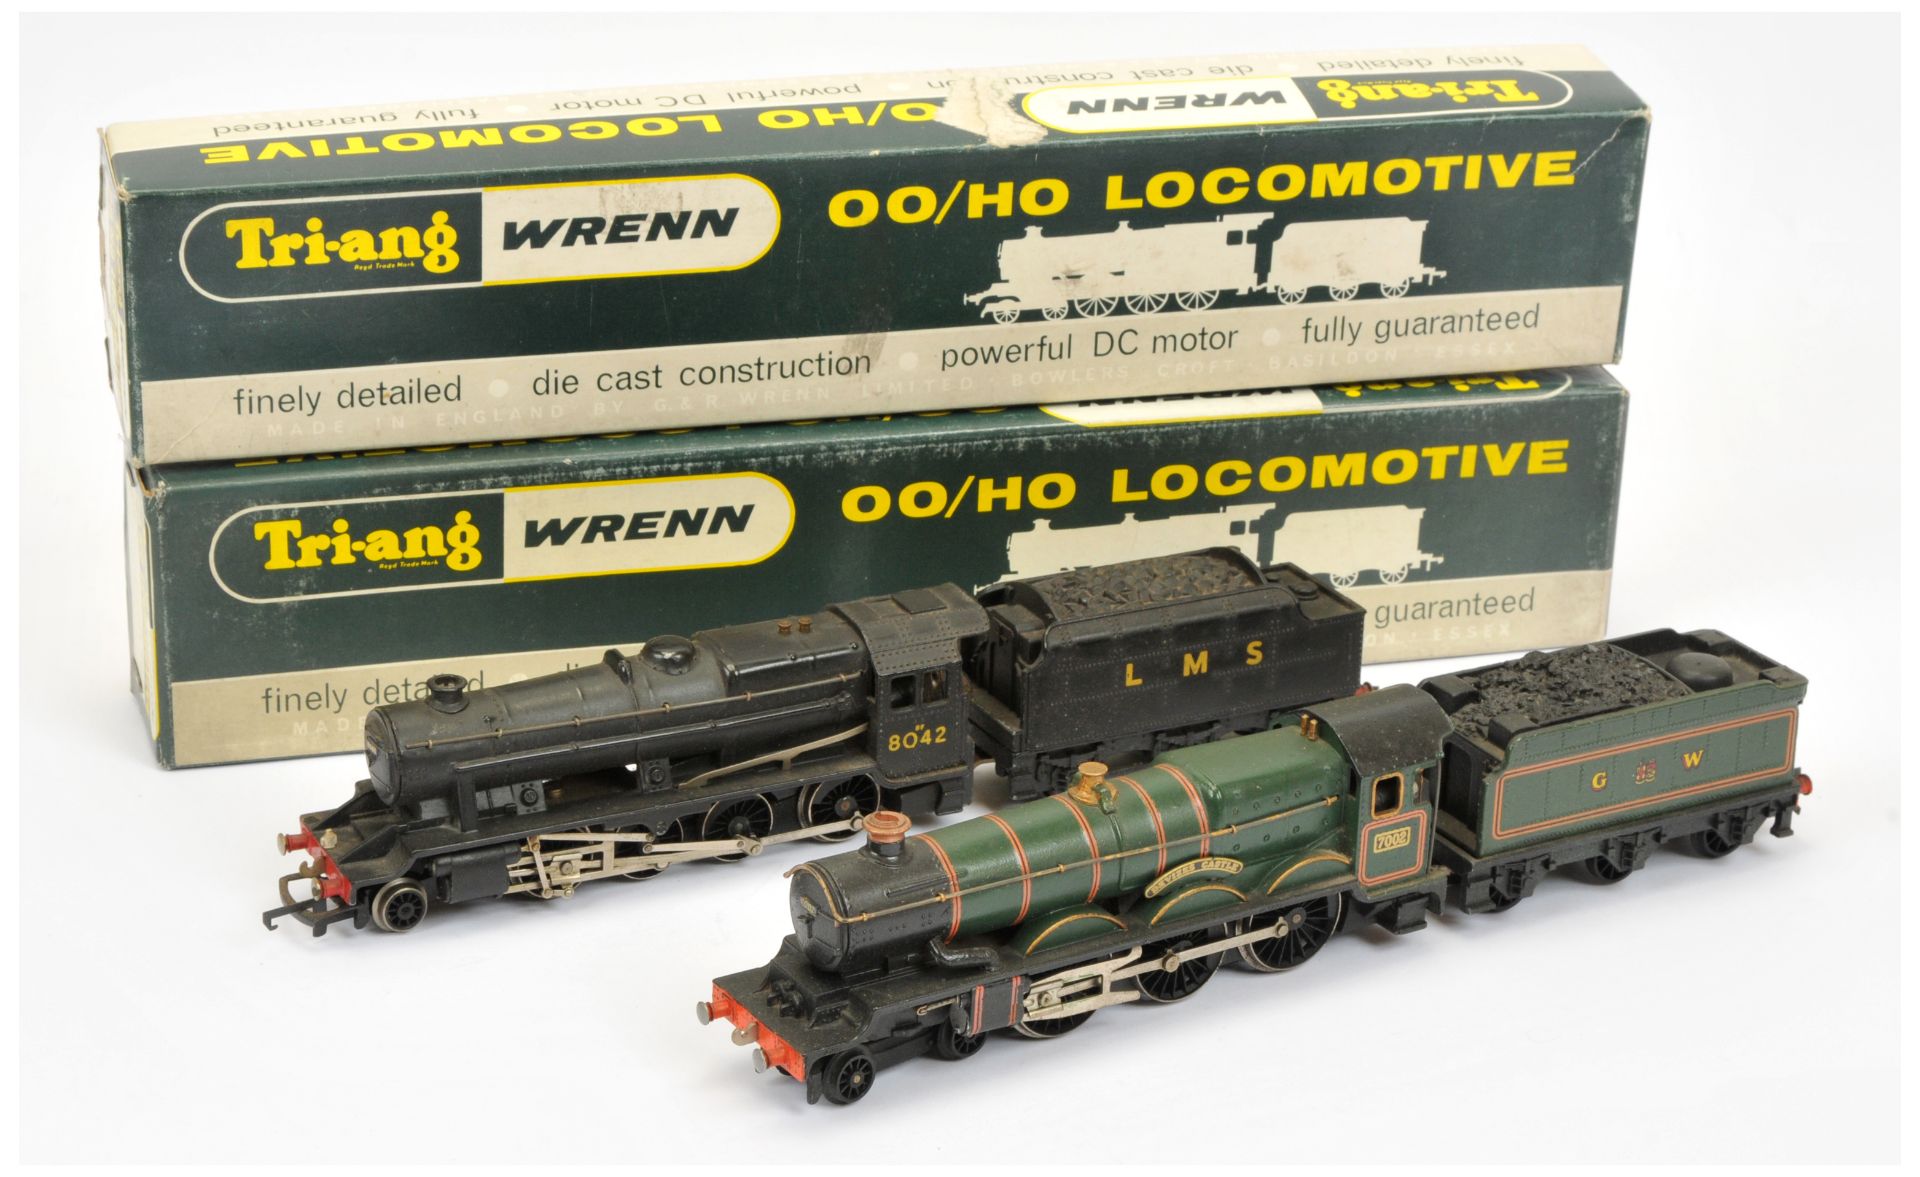 Wrenn pair of Steam Locomotive comprising of 